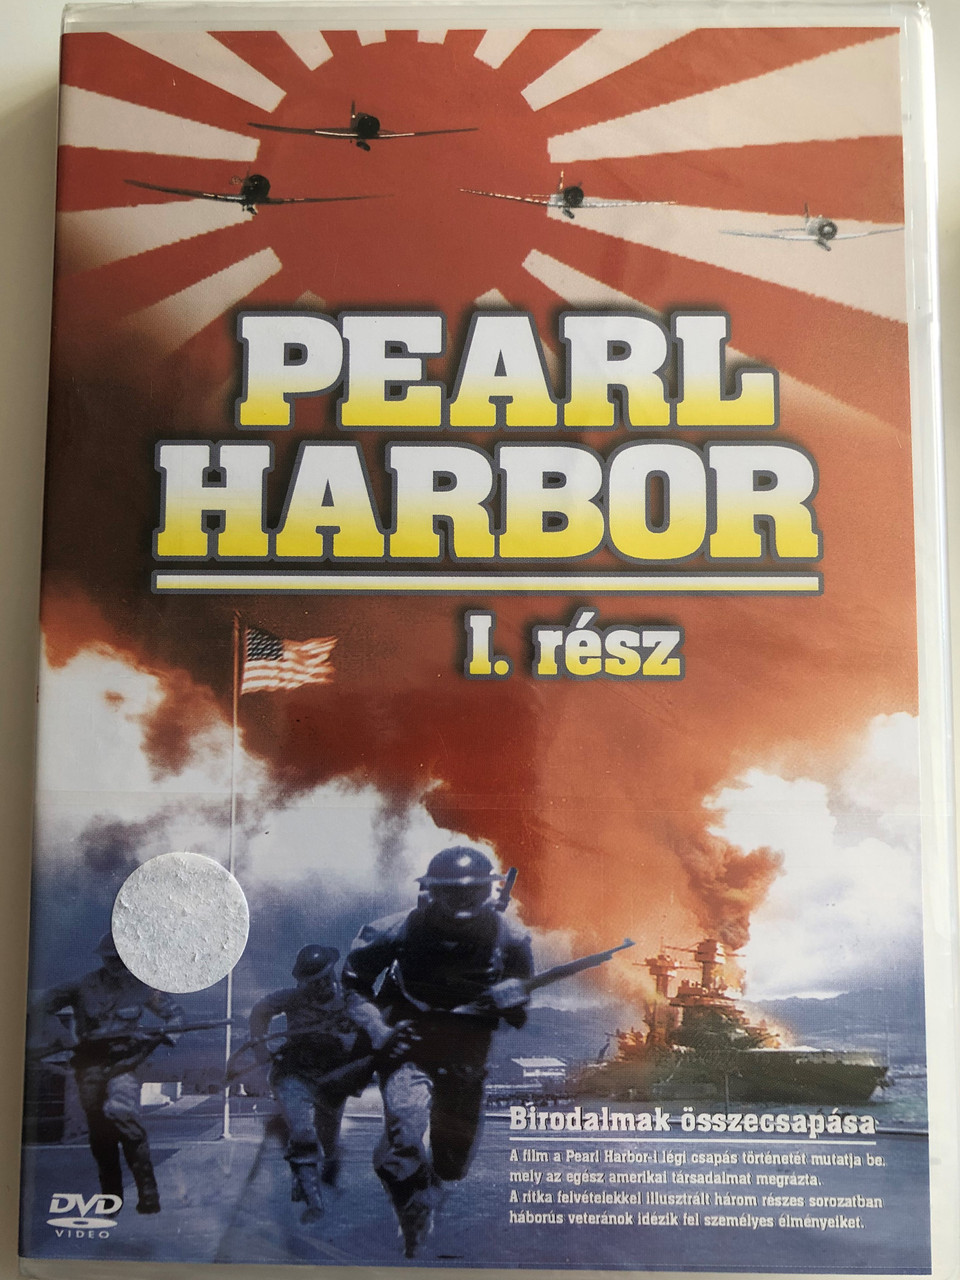 Pearl Harbor Part 1 DVD 2004 Pearl Harbor I. rész - Birodalmak összecsapása  / Historical WWII documentary about the attack on Pearl Harbor / Clash of  Empires - Bible in My Language